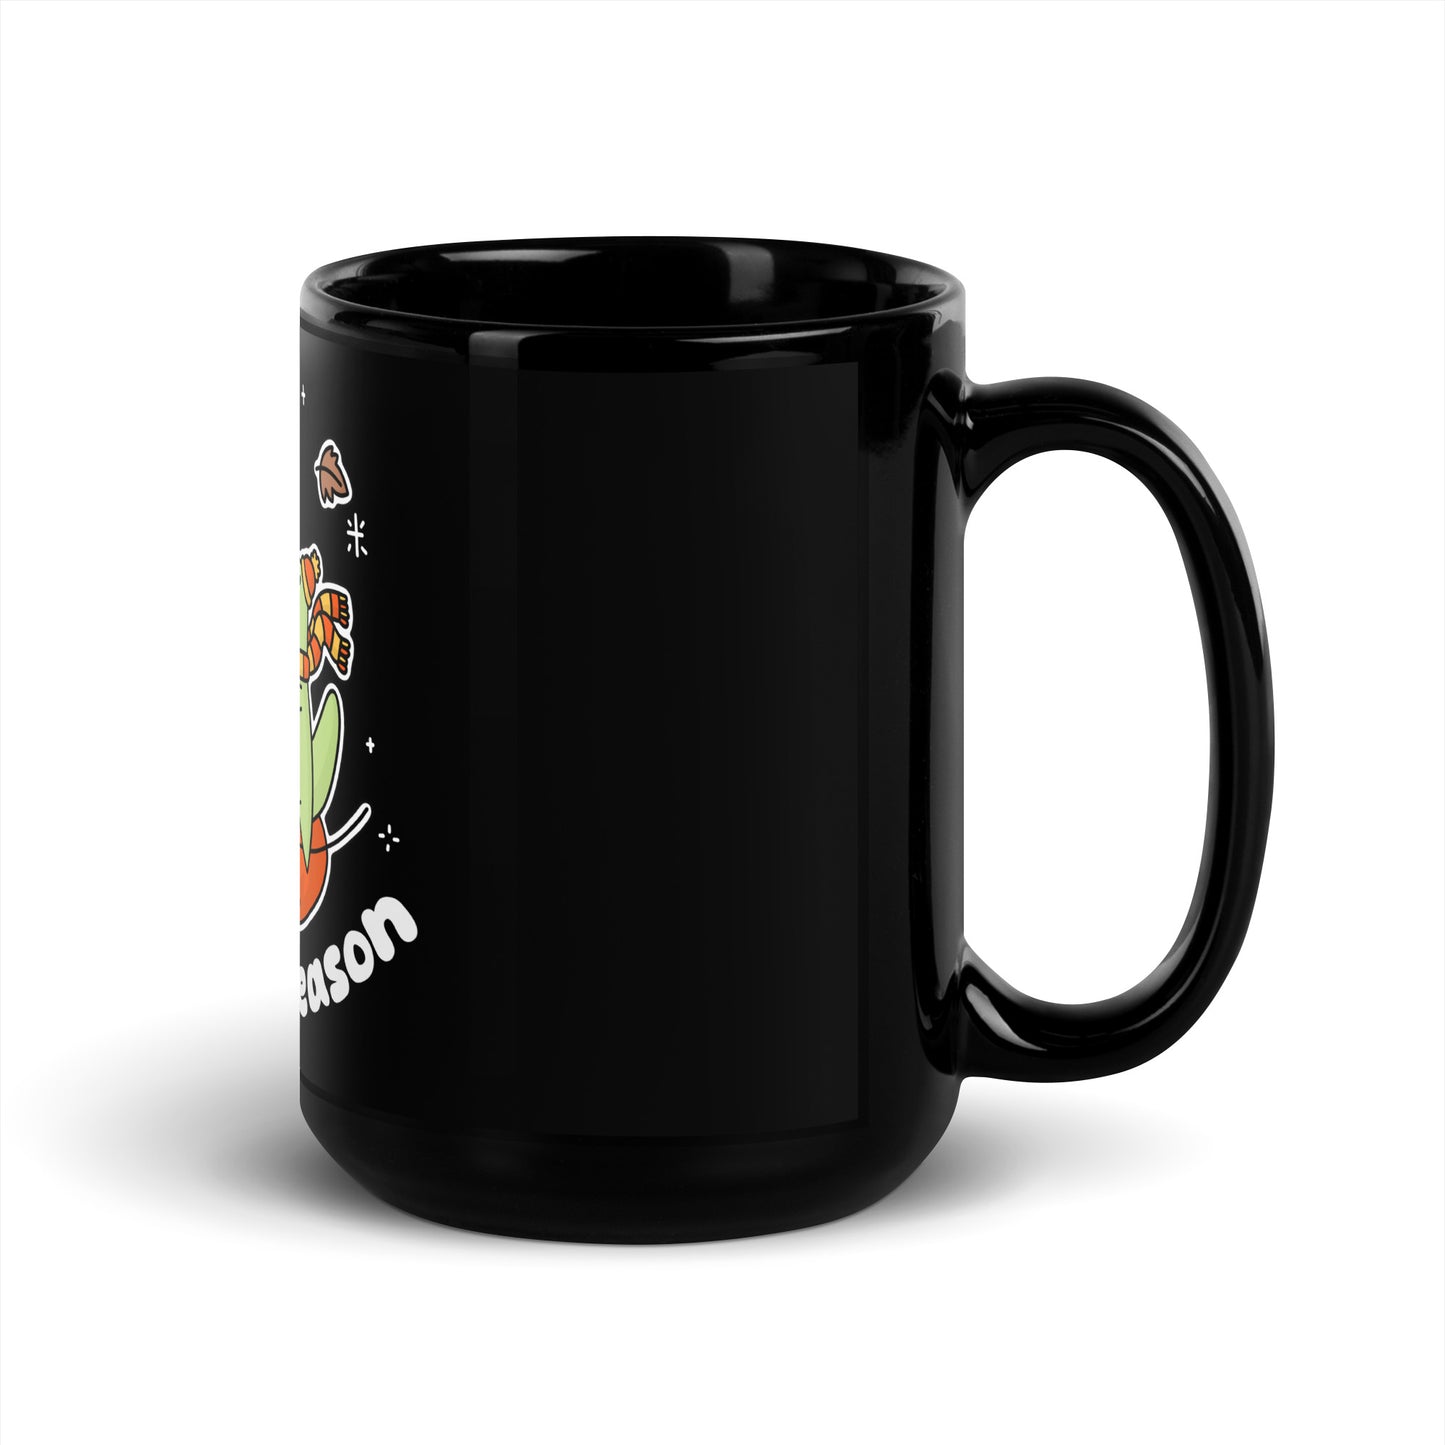 It's Cosy Season Black Glossy Mug